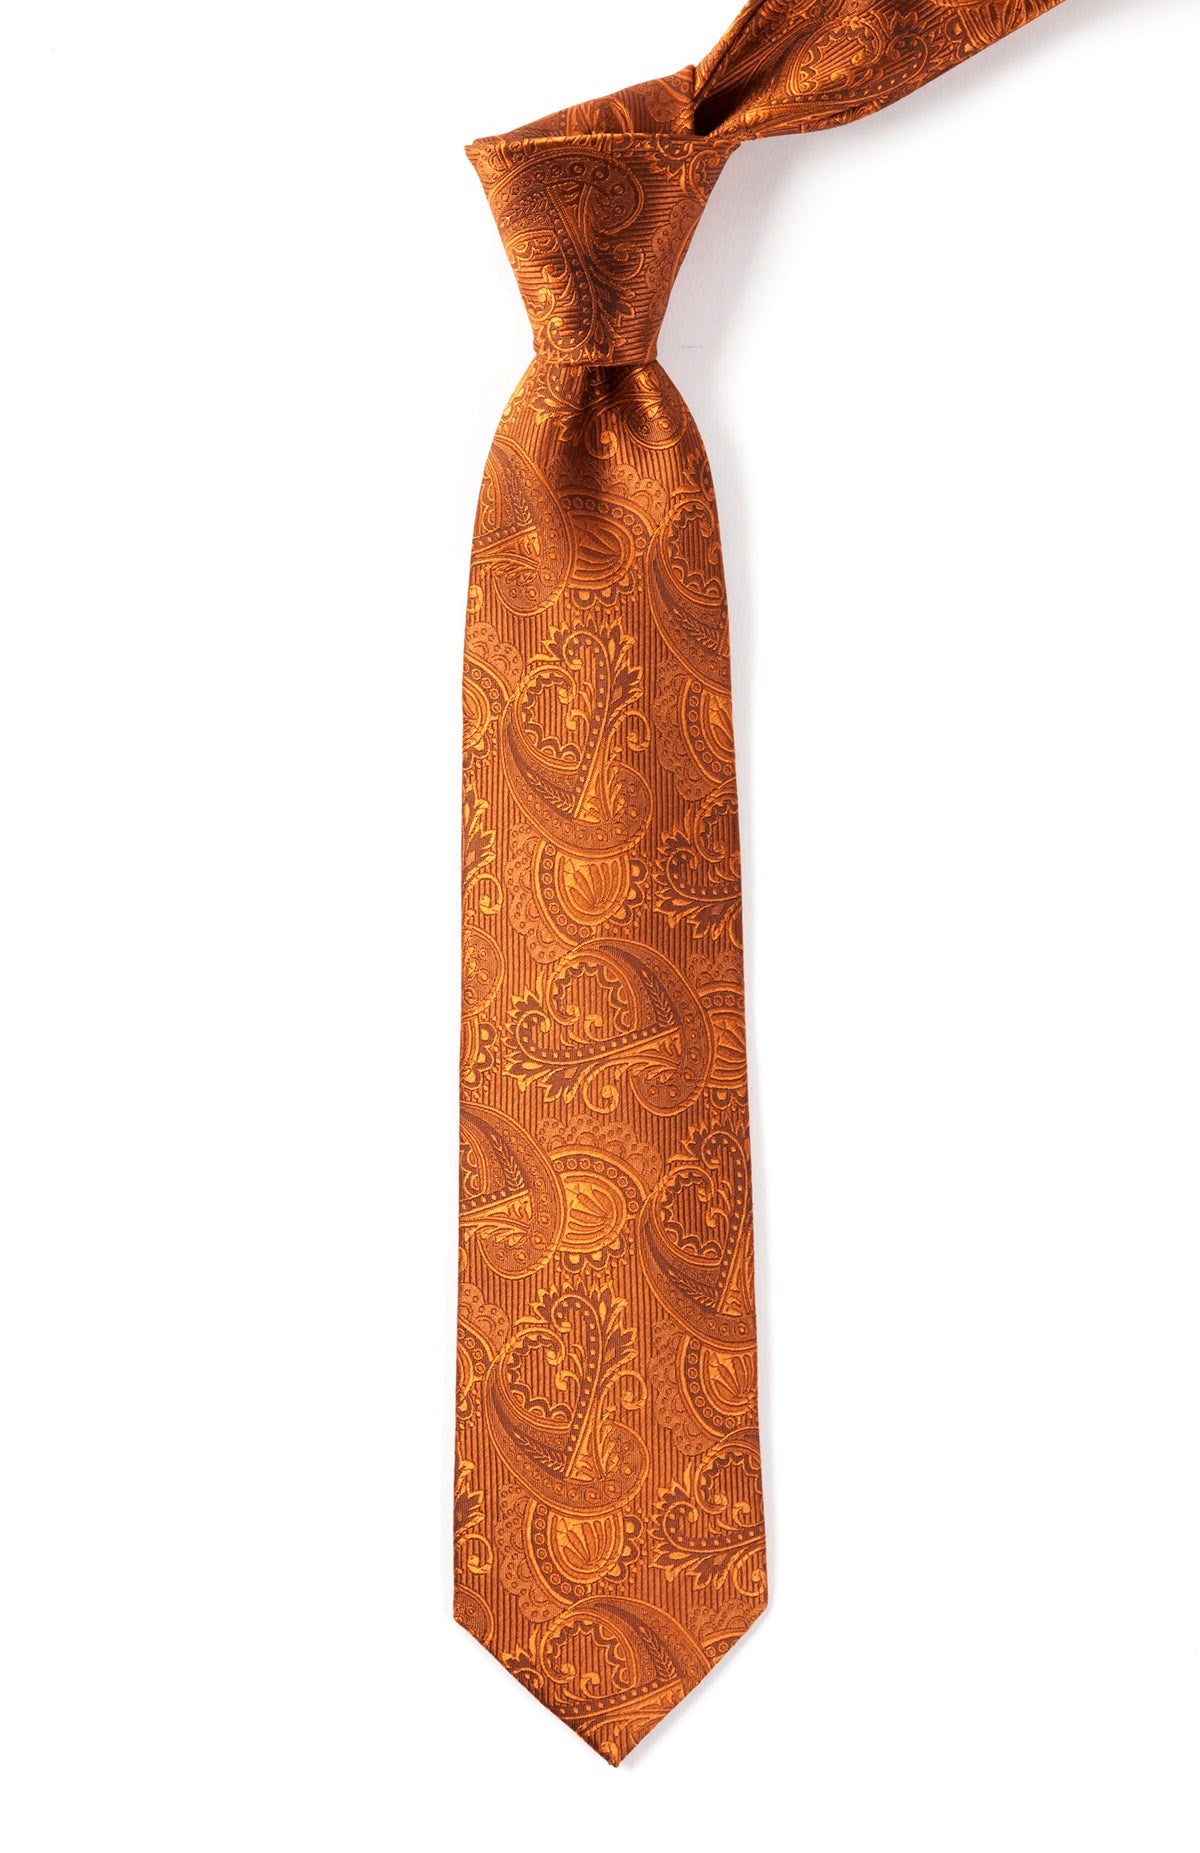 Twill Paisley Burnt Orange Tie, Silk Ties